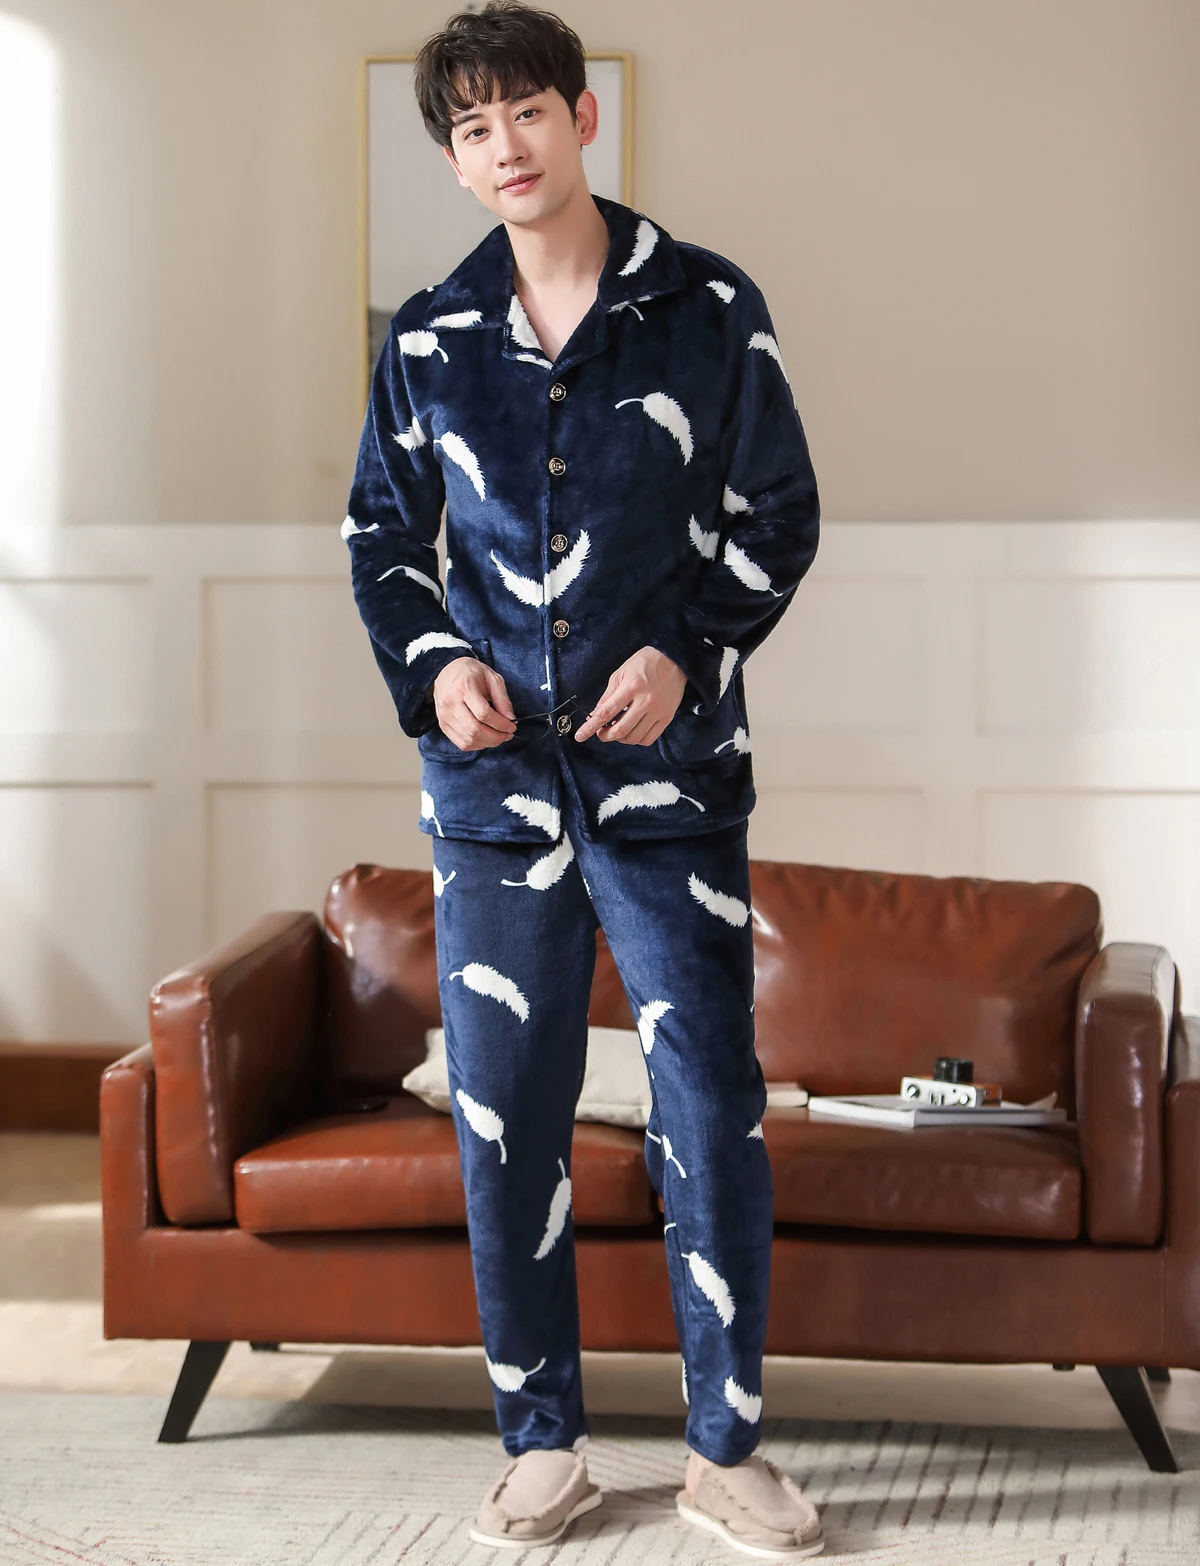 mens lounge wear Men's Winter Thicken Flannel Pajamas Sets Male Long Sleeve Pajamas Plus Size Pijama Sleepwear Homewear Teenager Casual Pyjamas plaid pajama pants Men's Sleep & Lounge